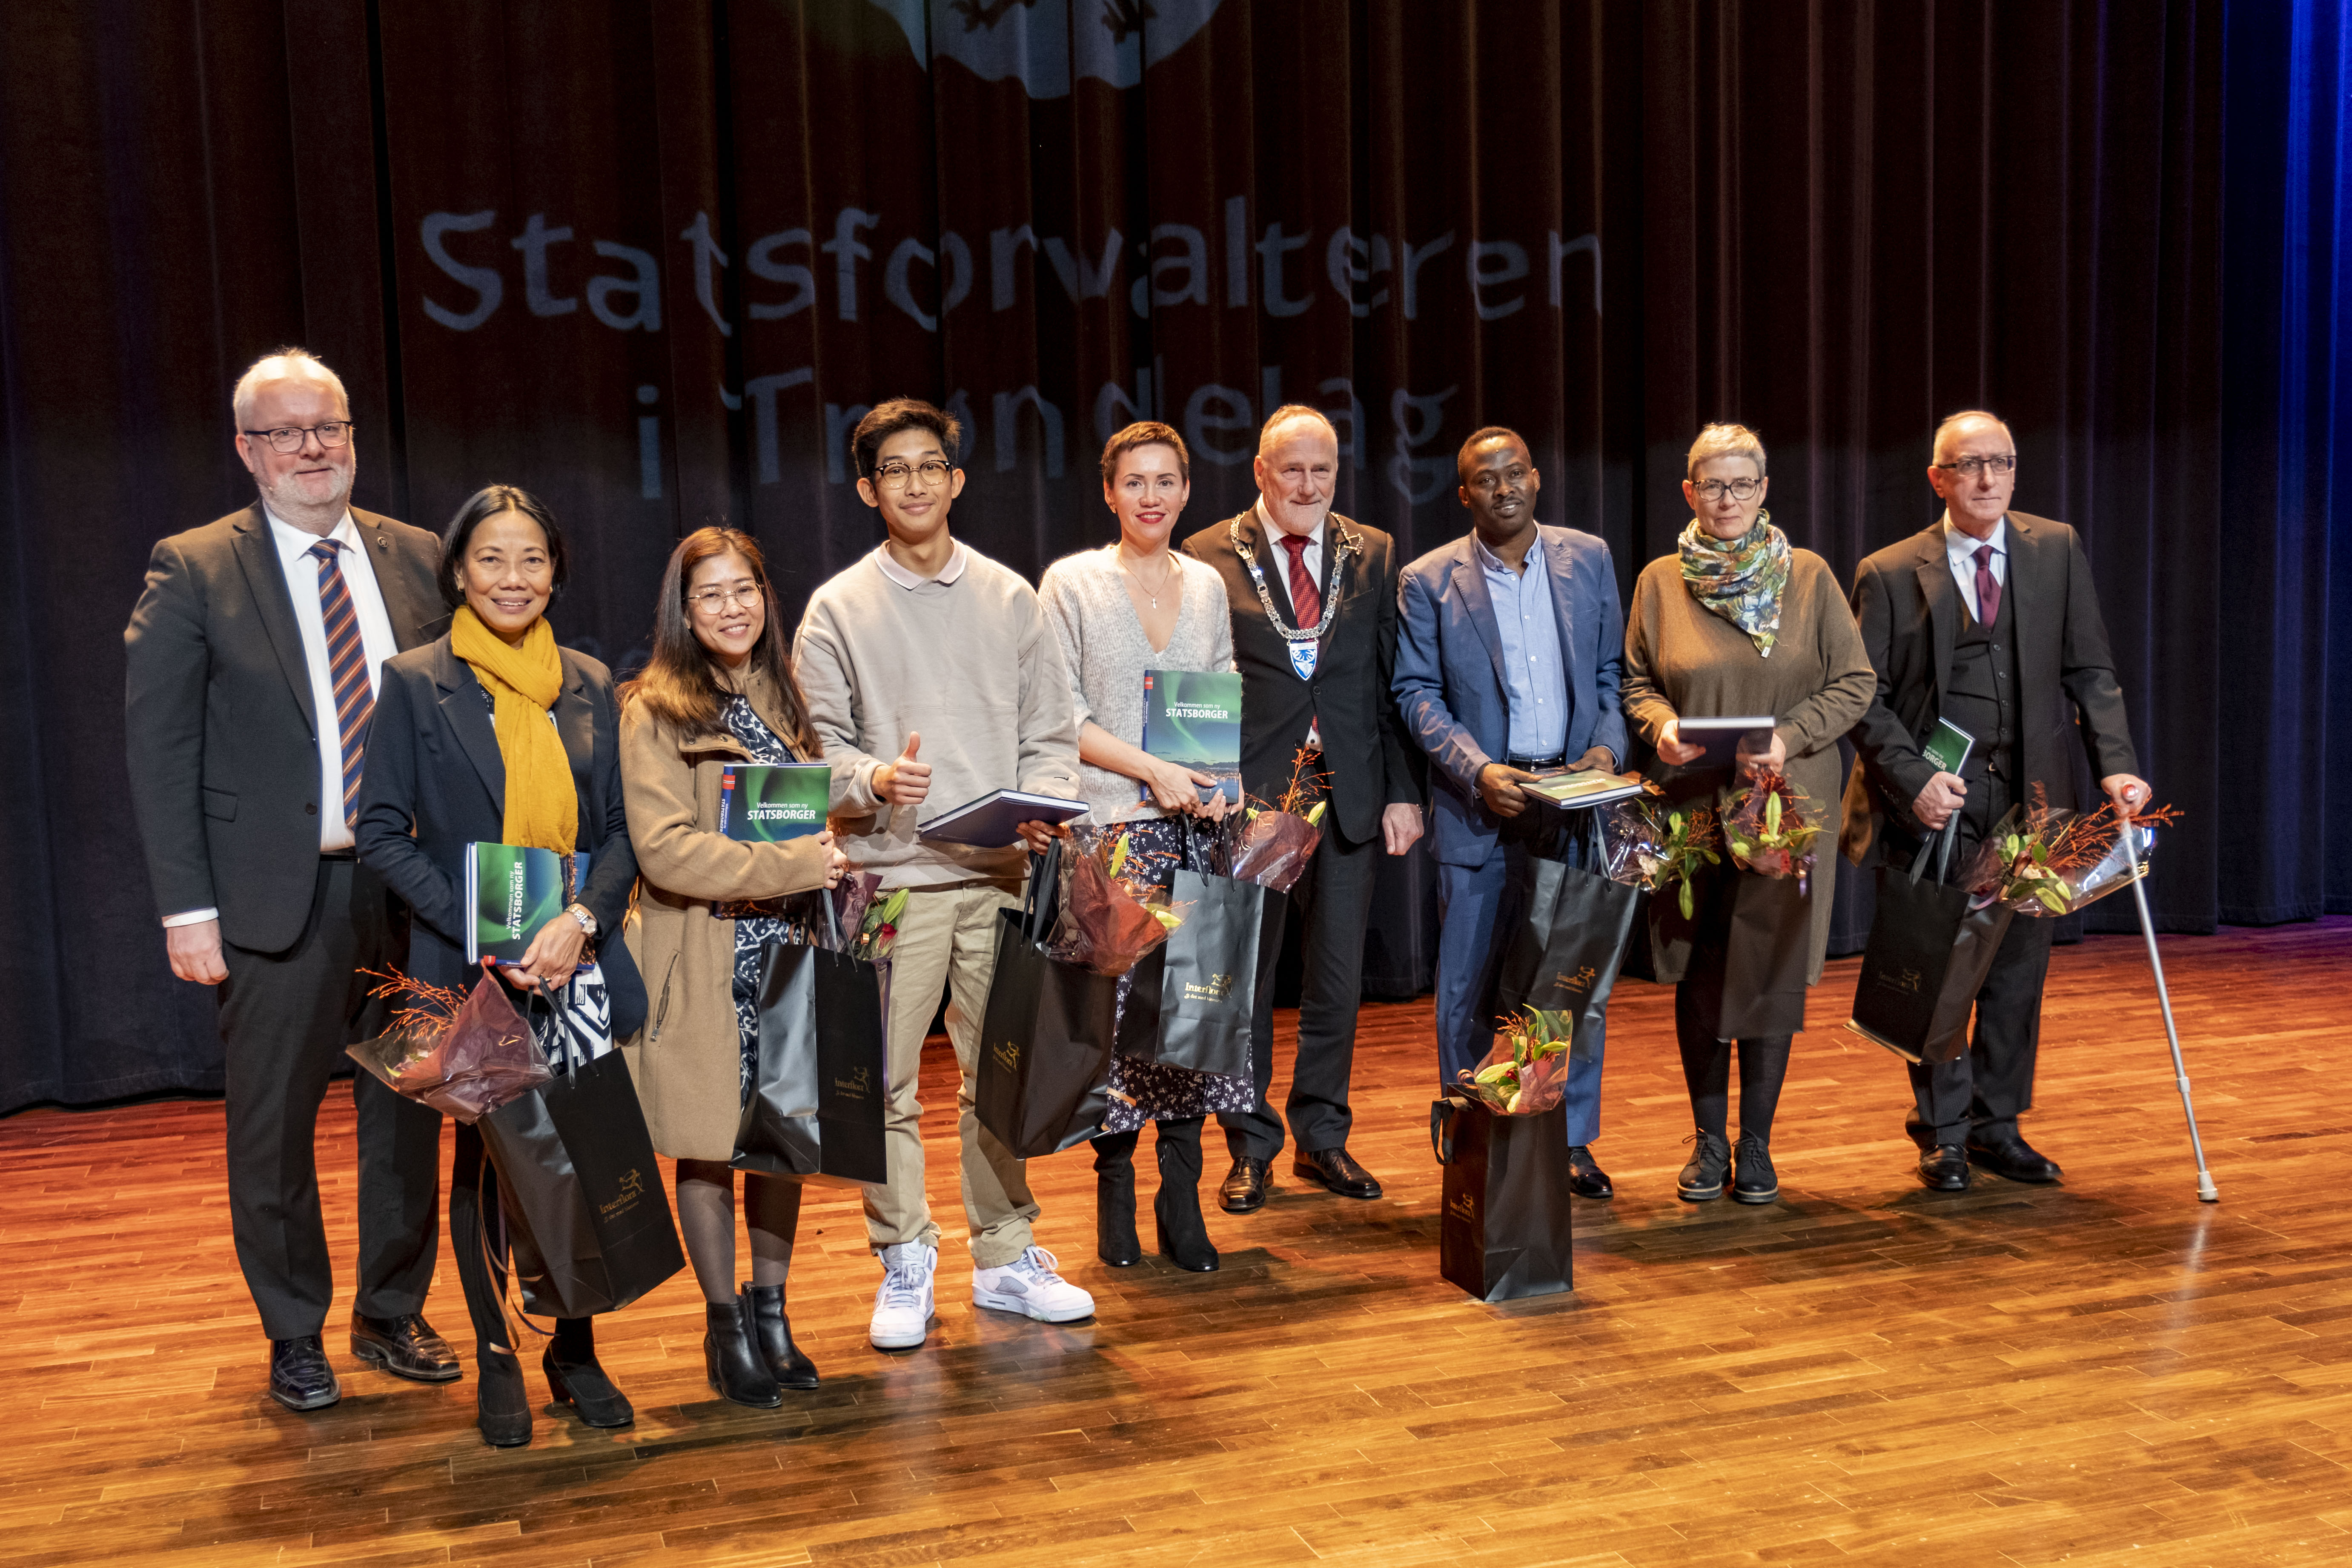 Statsborgerseremoni-Stjørdal-2022_Kommunebilde_Hitra.jpg